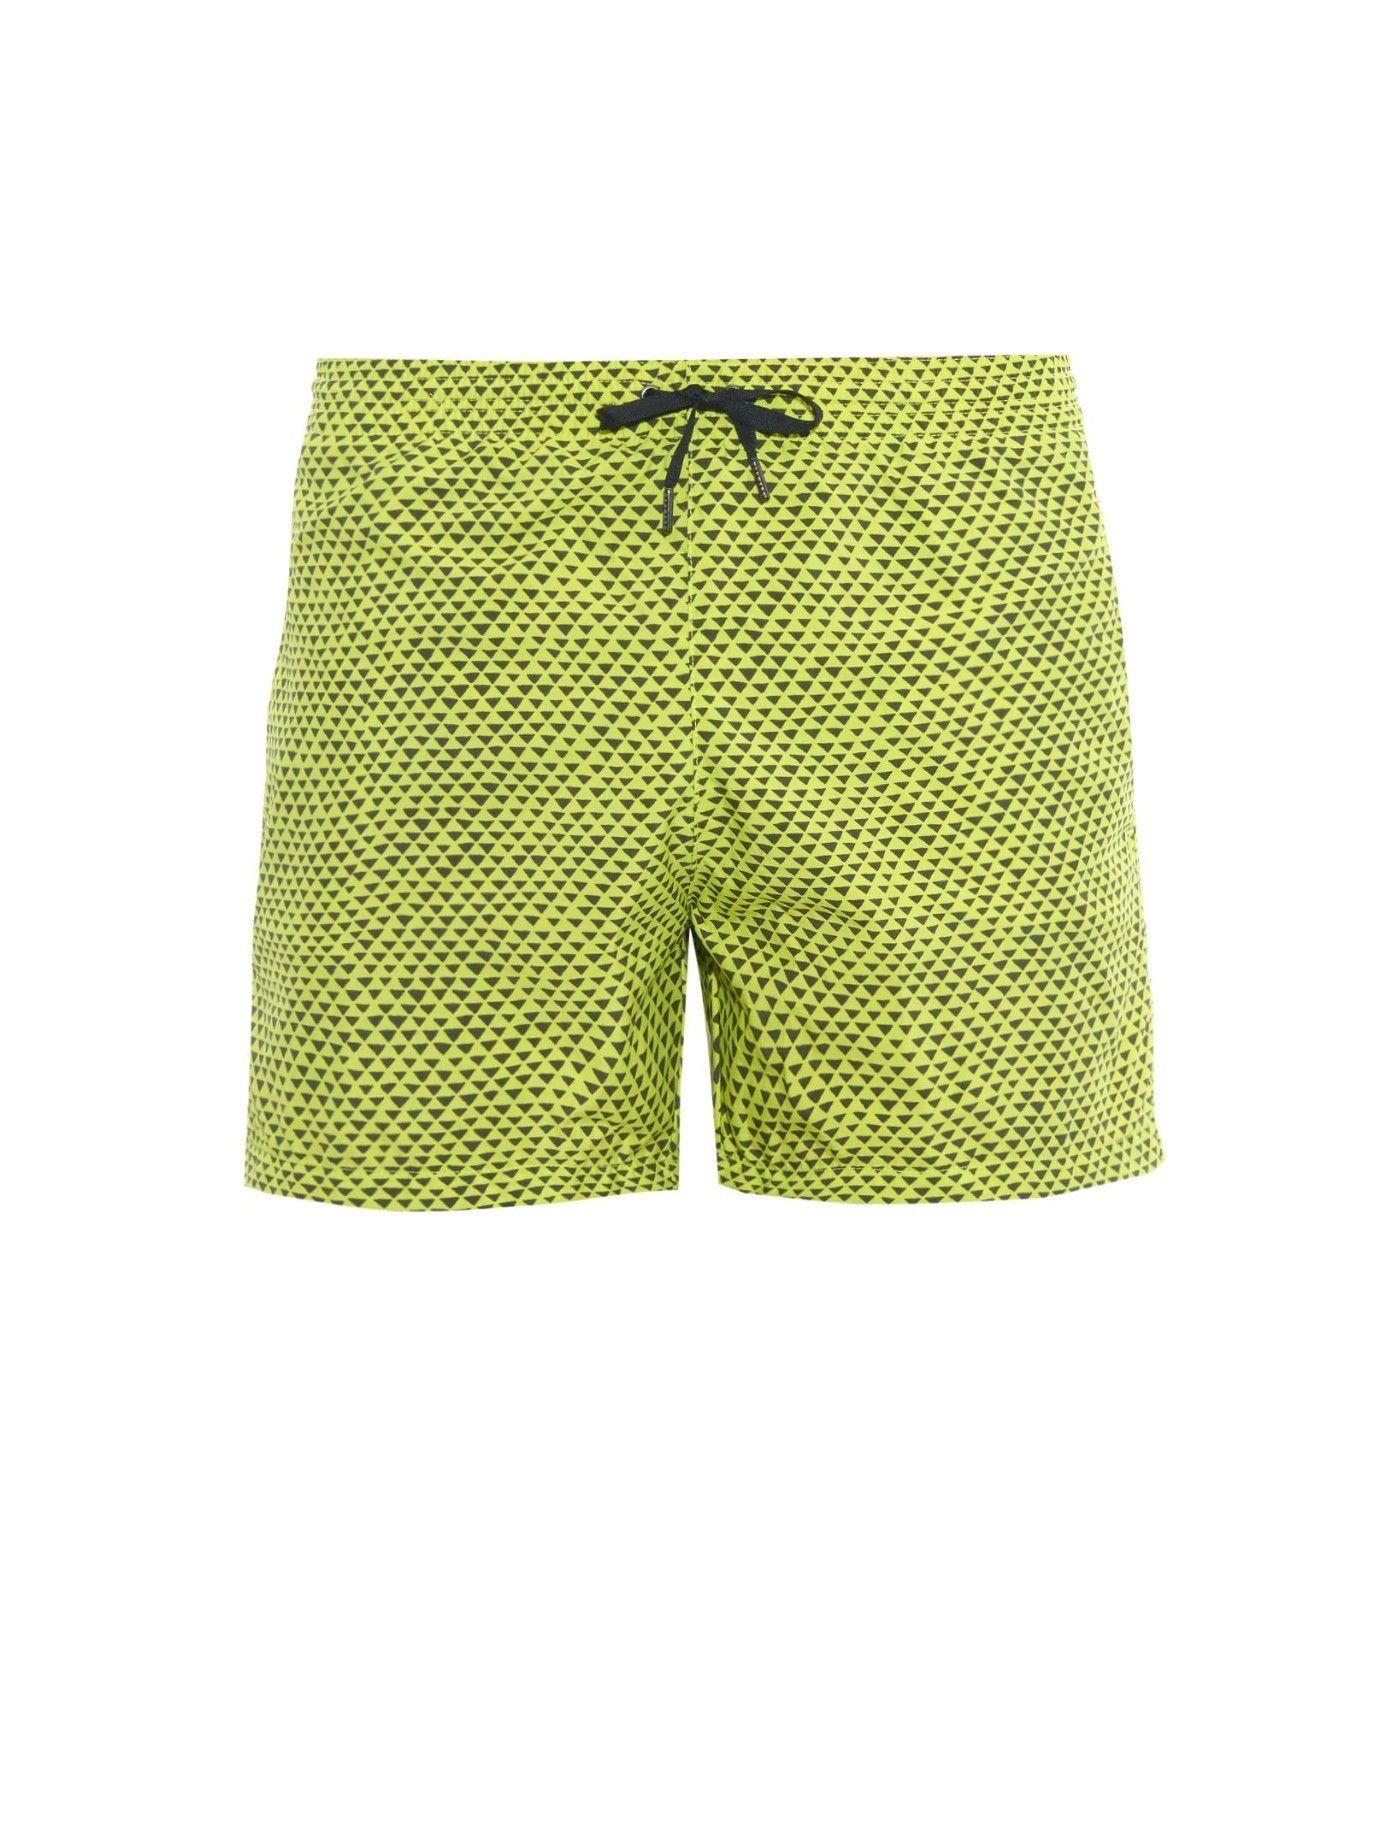 Green with Yellow Triangle Logo - Danward Triangle Print Swim Shorts In Yellow For Men